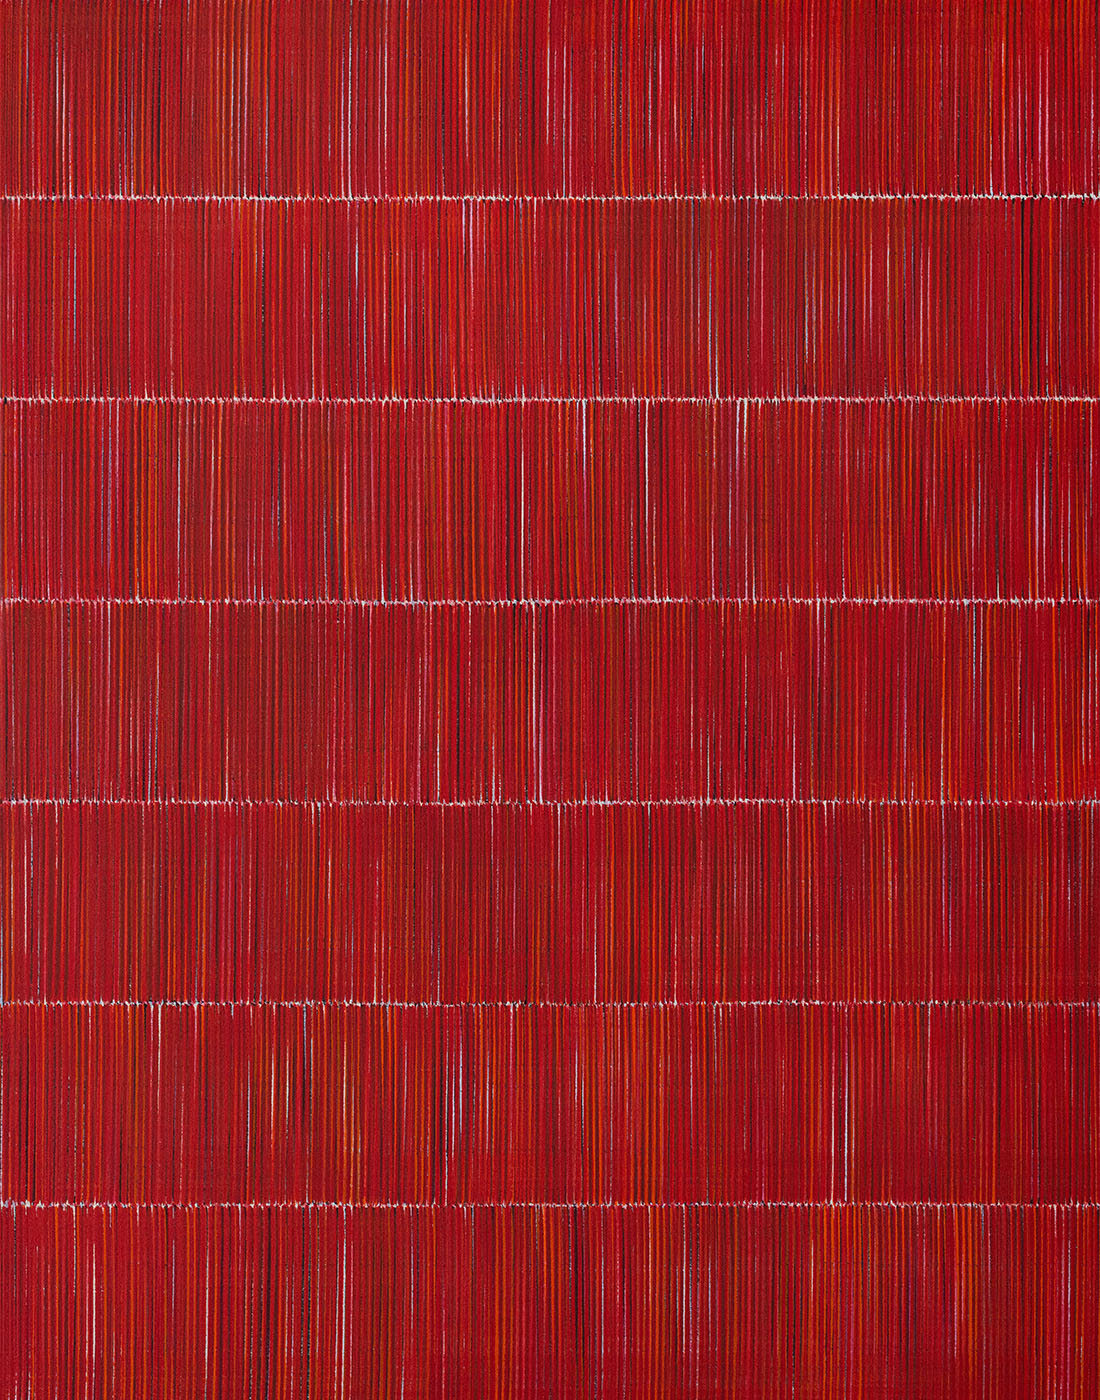 Nikola Dimitrov, KlangRaumRot III, 2020, Pigmente, Bindemittel auf Leinwand, 140 x 110 cm